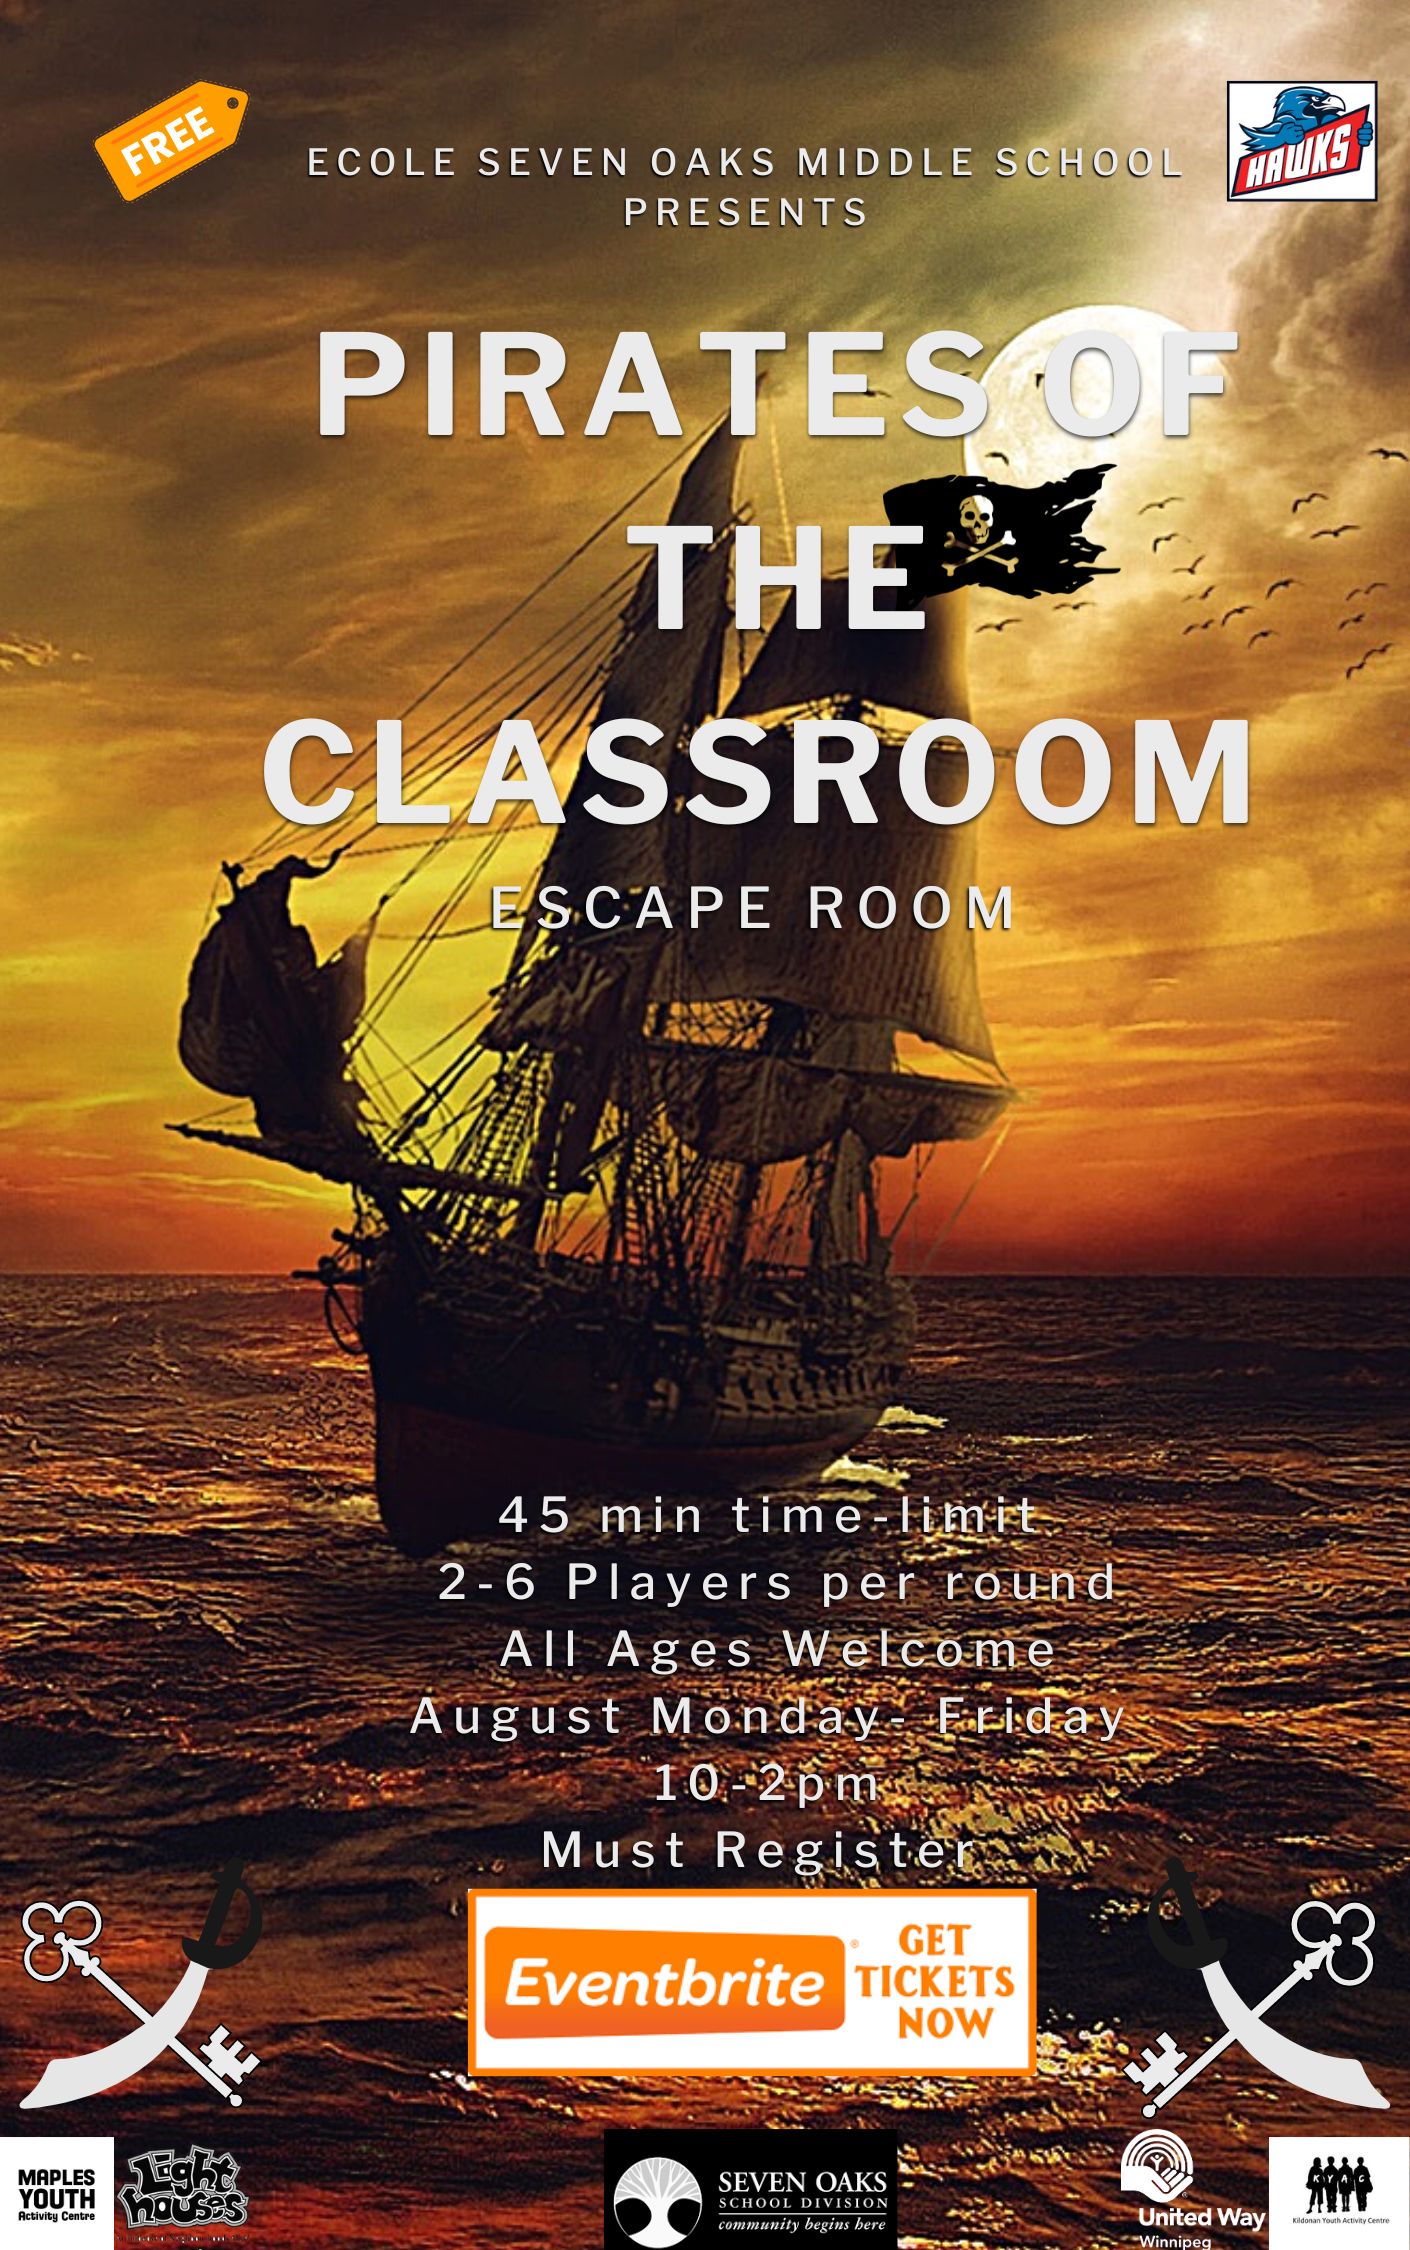 Pirates of the Classroom Escape Room.jpg